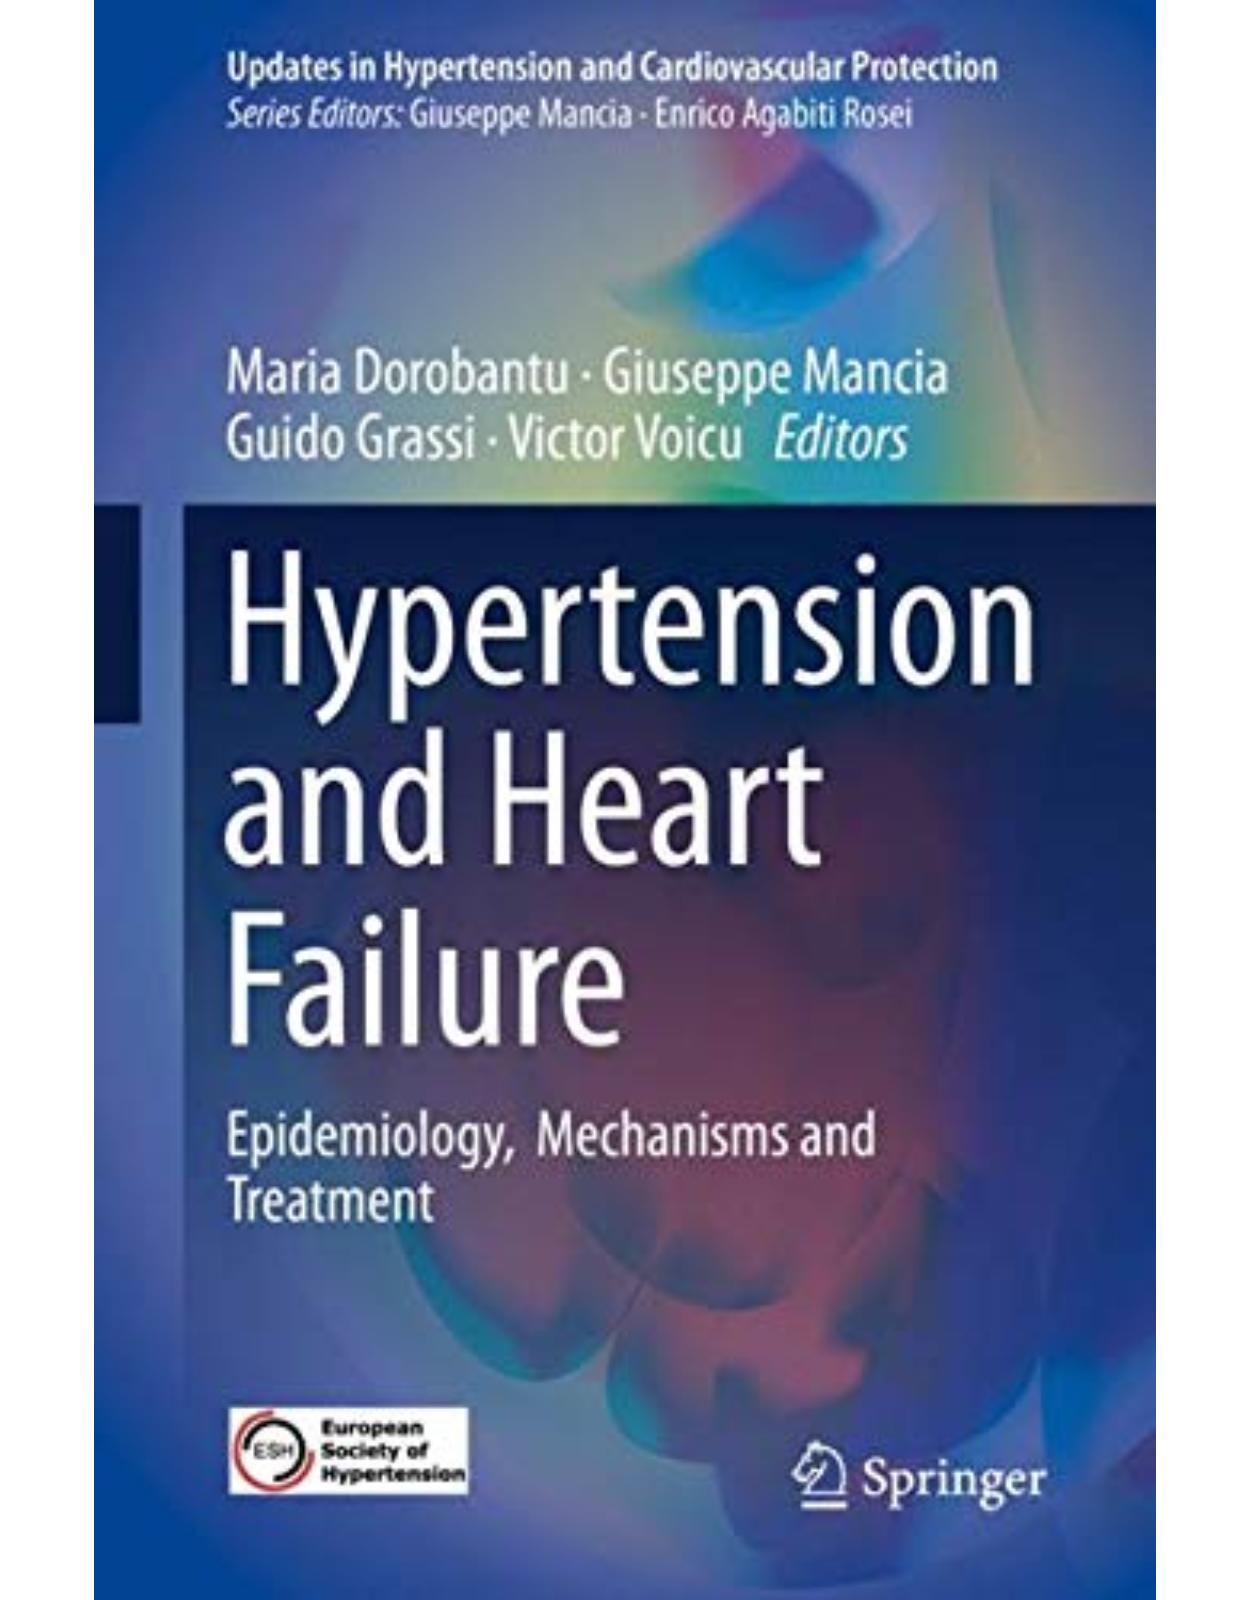 Hypertension and Heart Failure Epidemiology, Mechanisms and Treatment